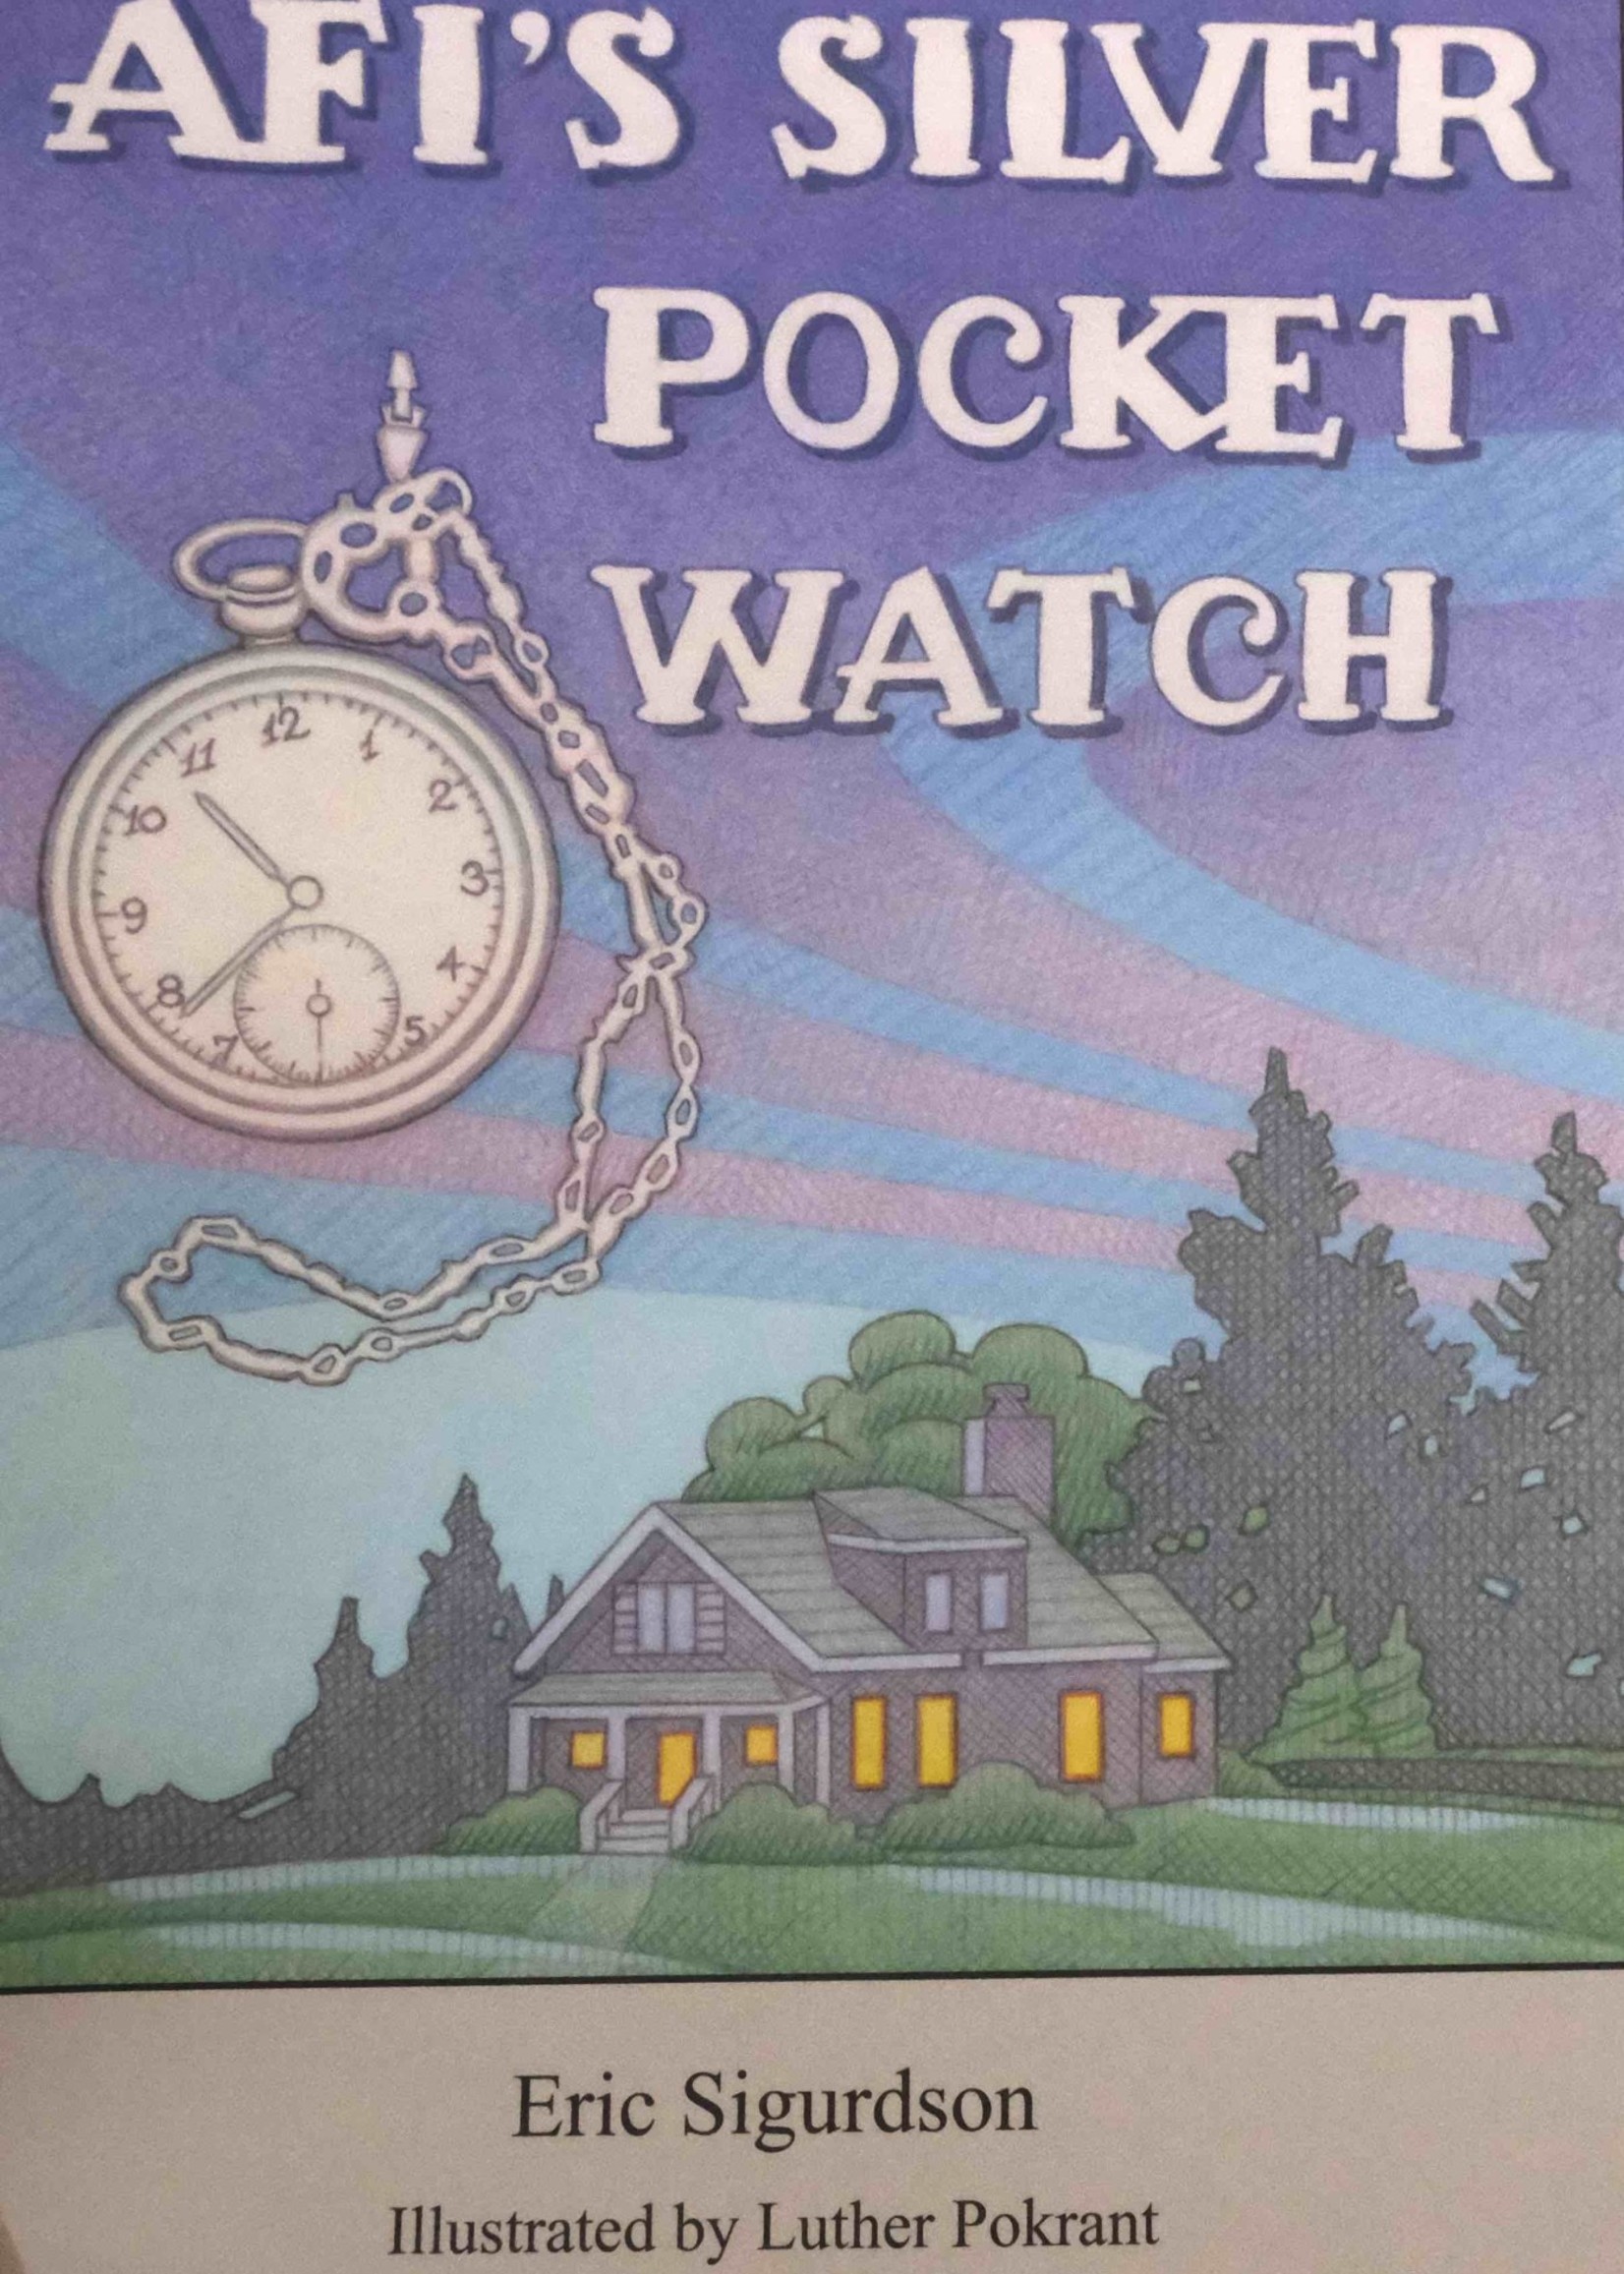 None BOOK- Afi's Silver Pocket Watch